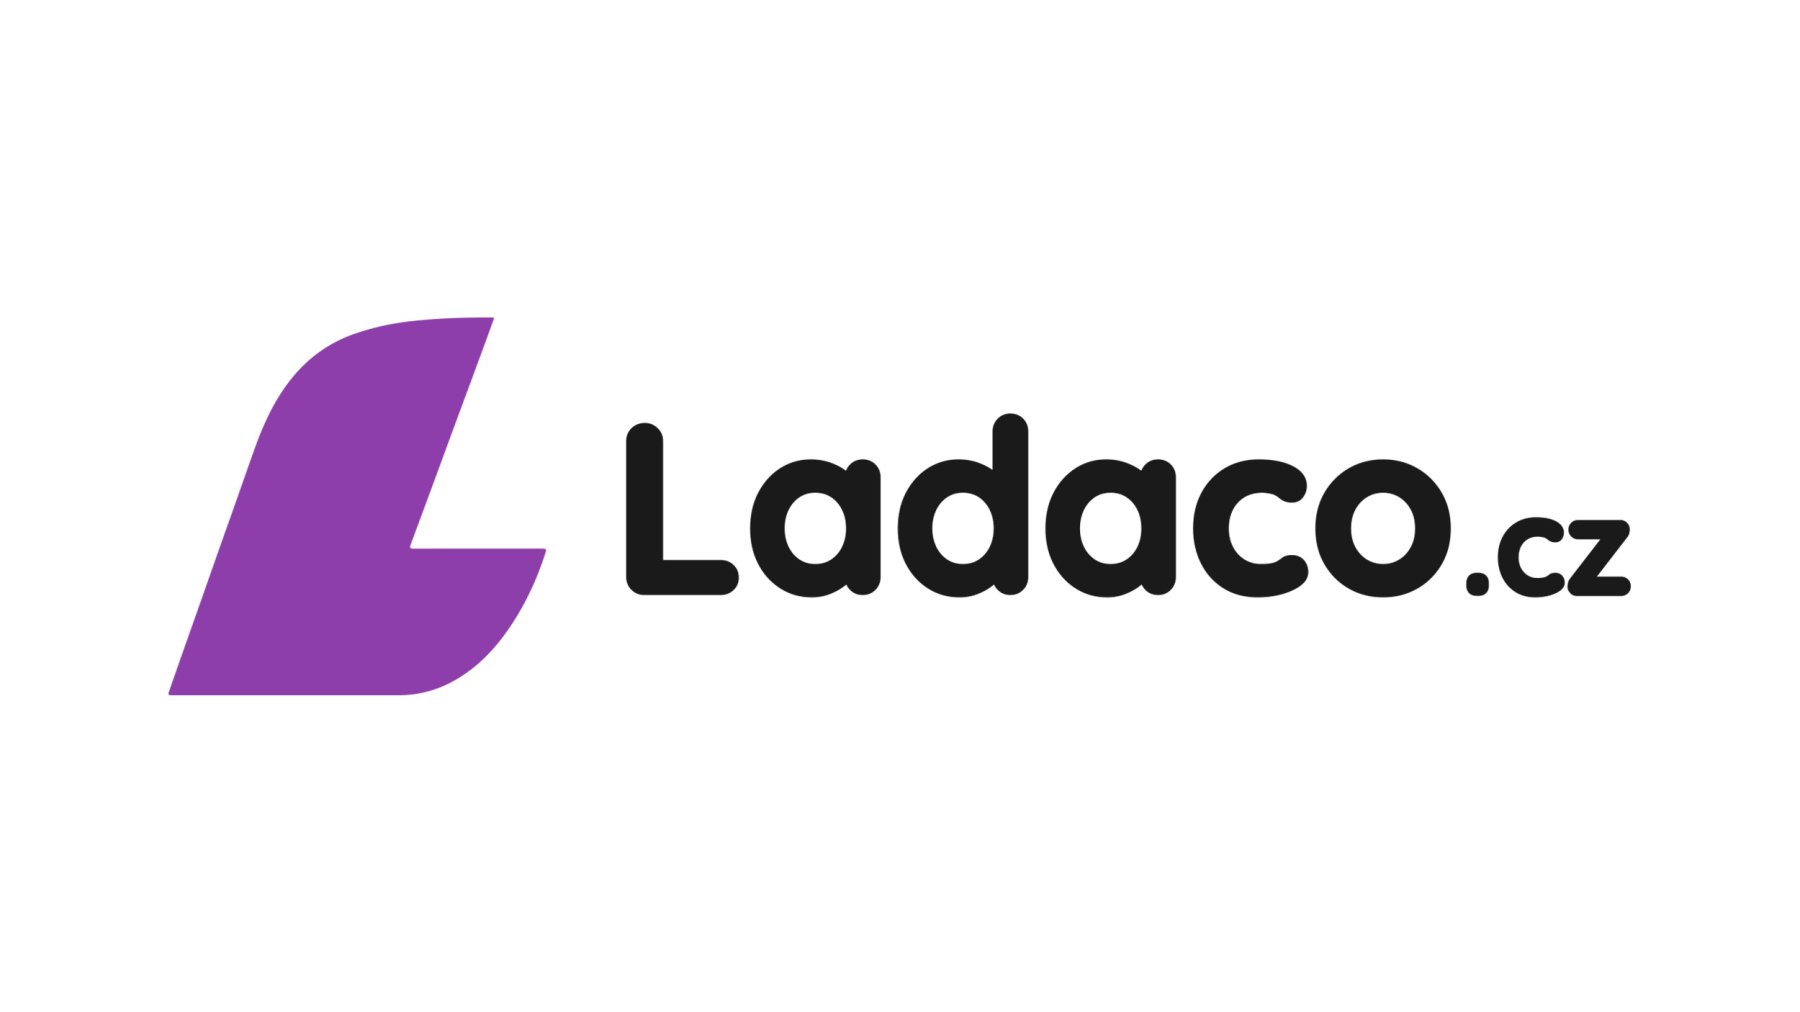 Ladaco logo velké+.jpg - Ladaco.cz